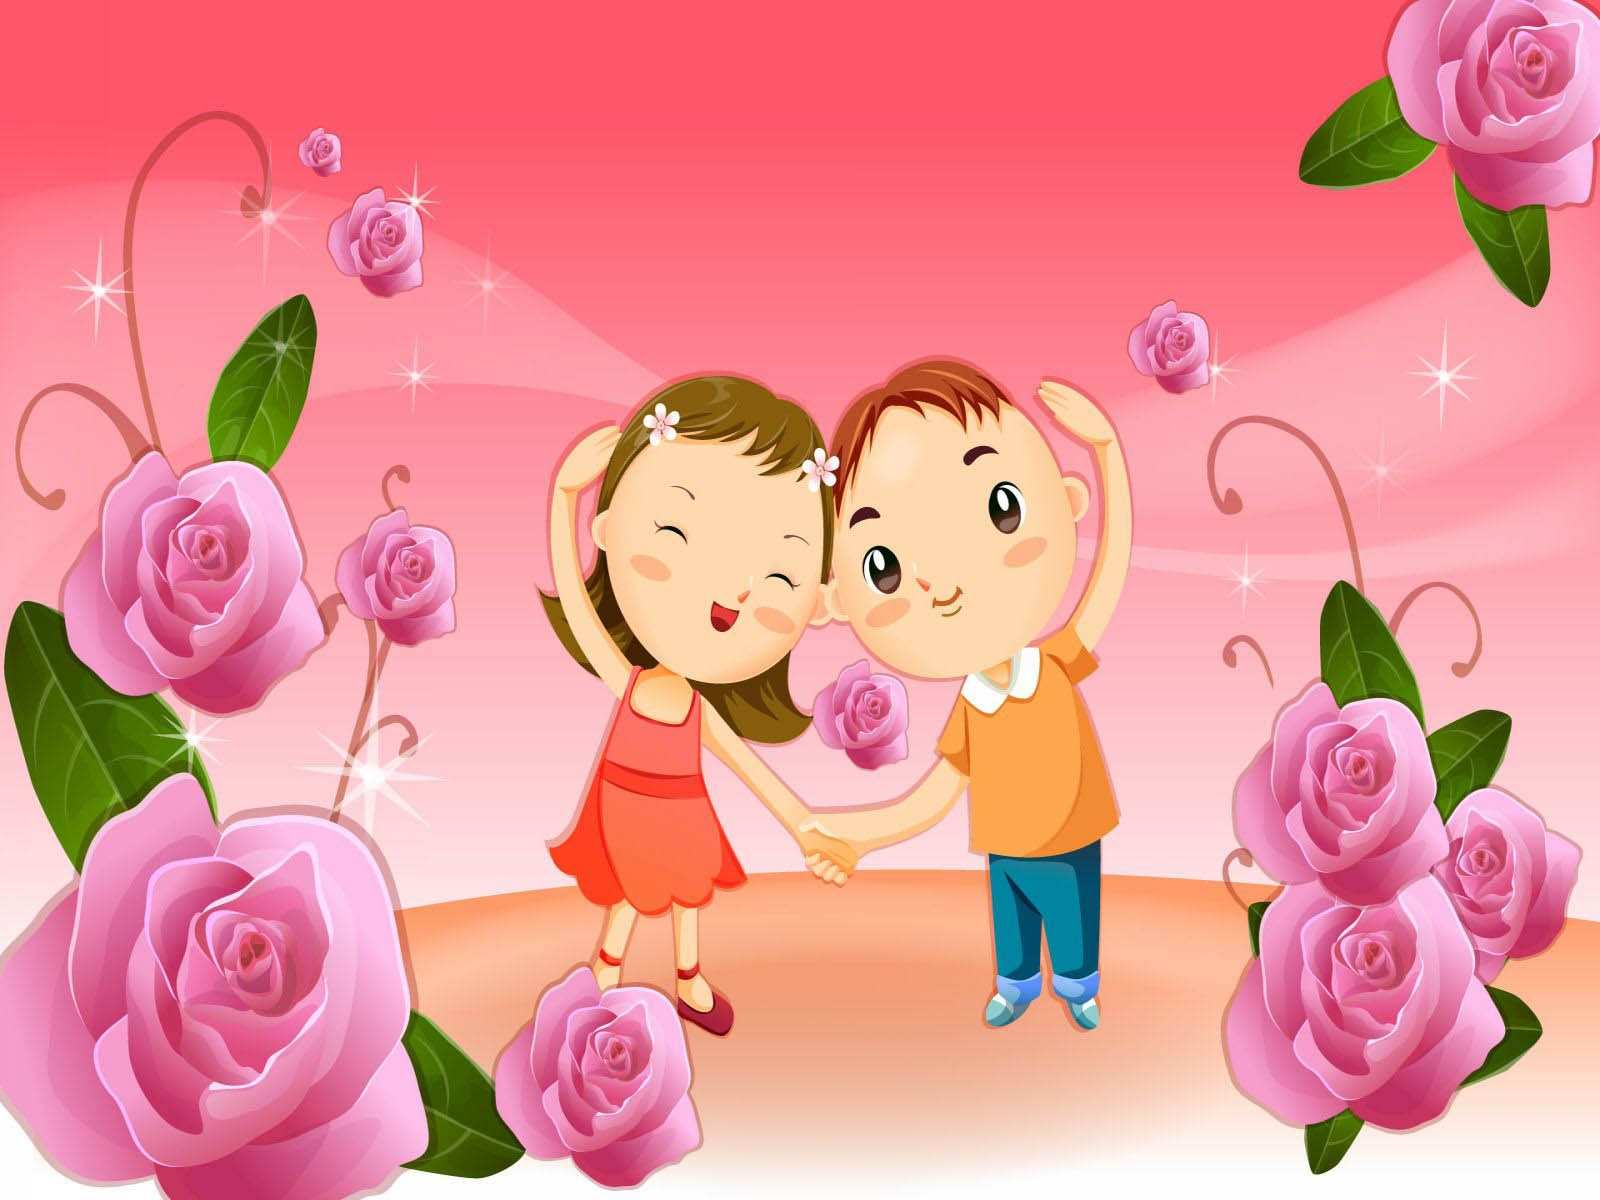 wallpaper kartun lucu dan imut,pink,cartoon,illustration,animated cartoon,garden roses